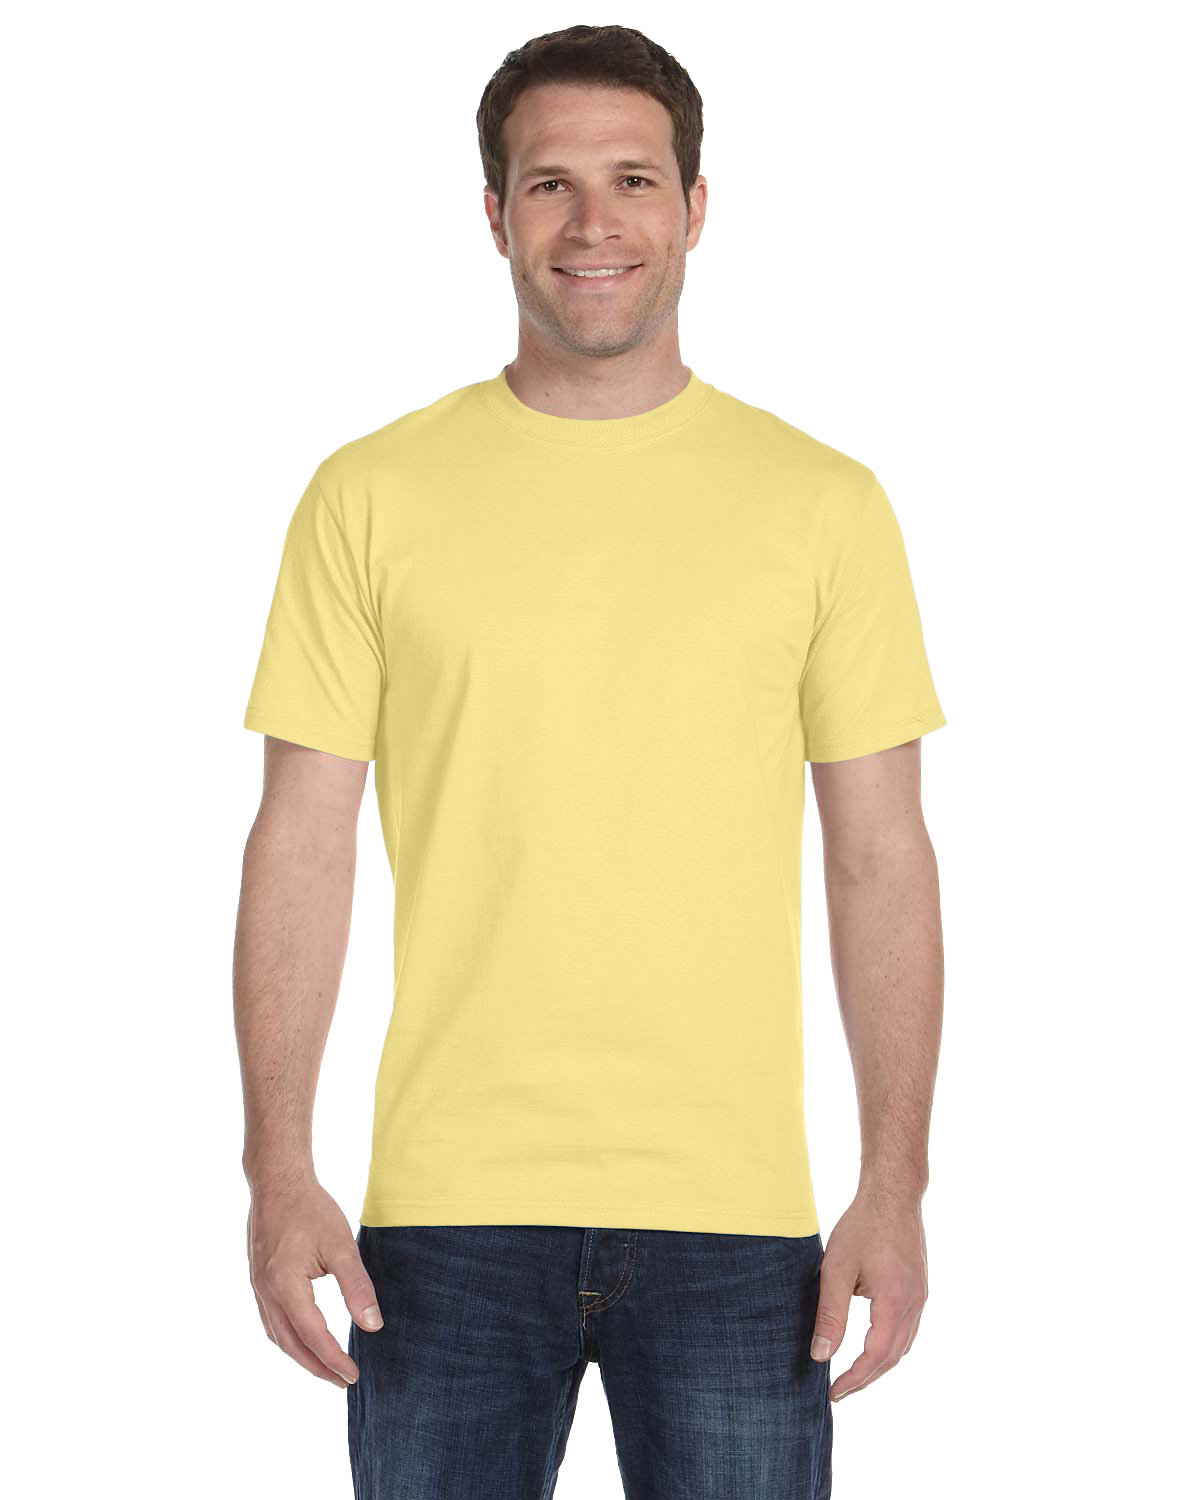 Hanes Adult Essential Short Sleeve T-Shirt daffodil yellow 